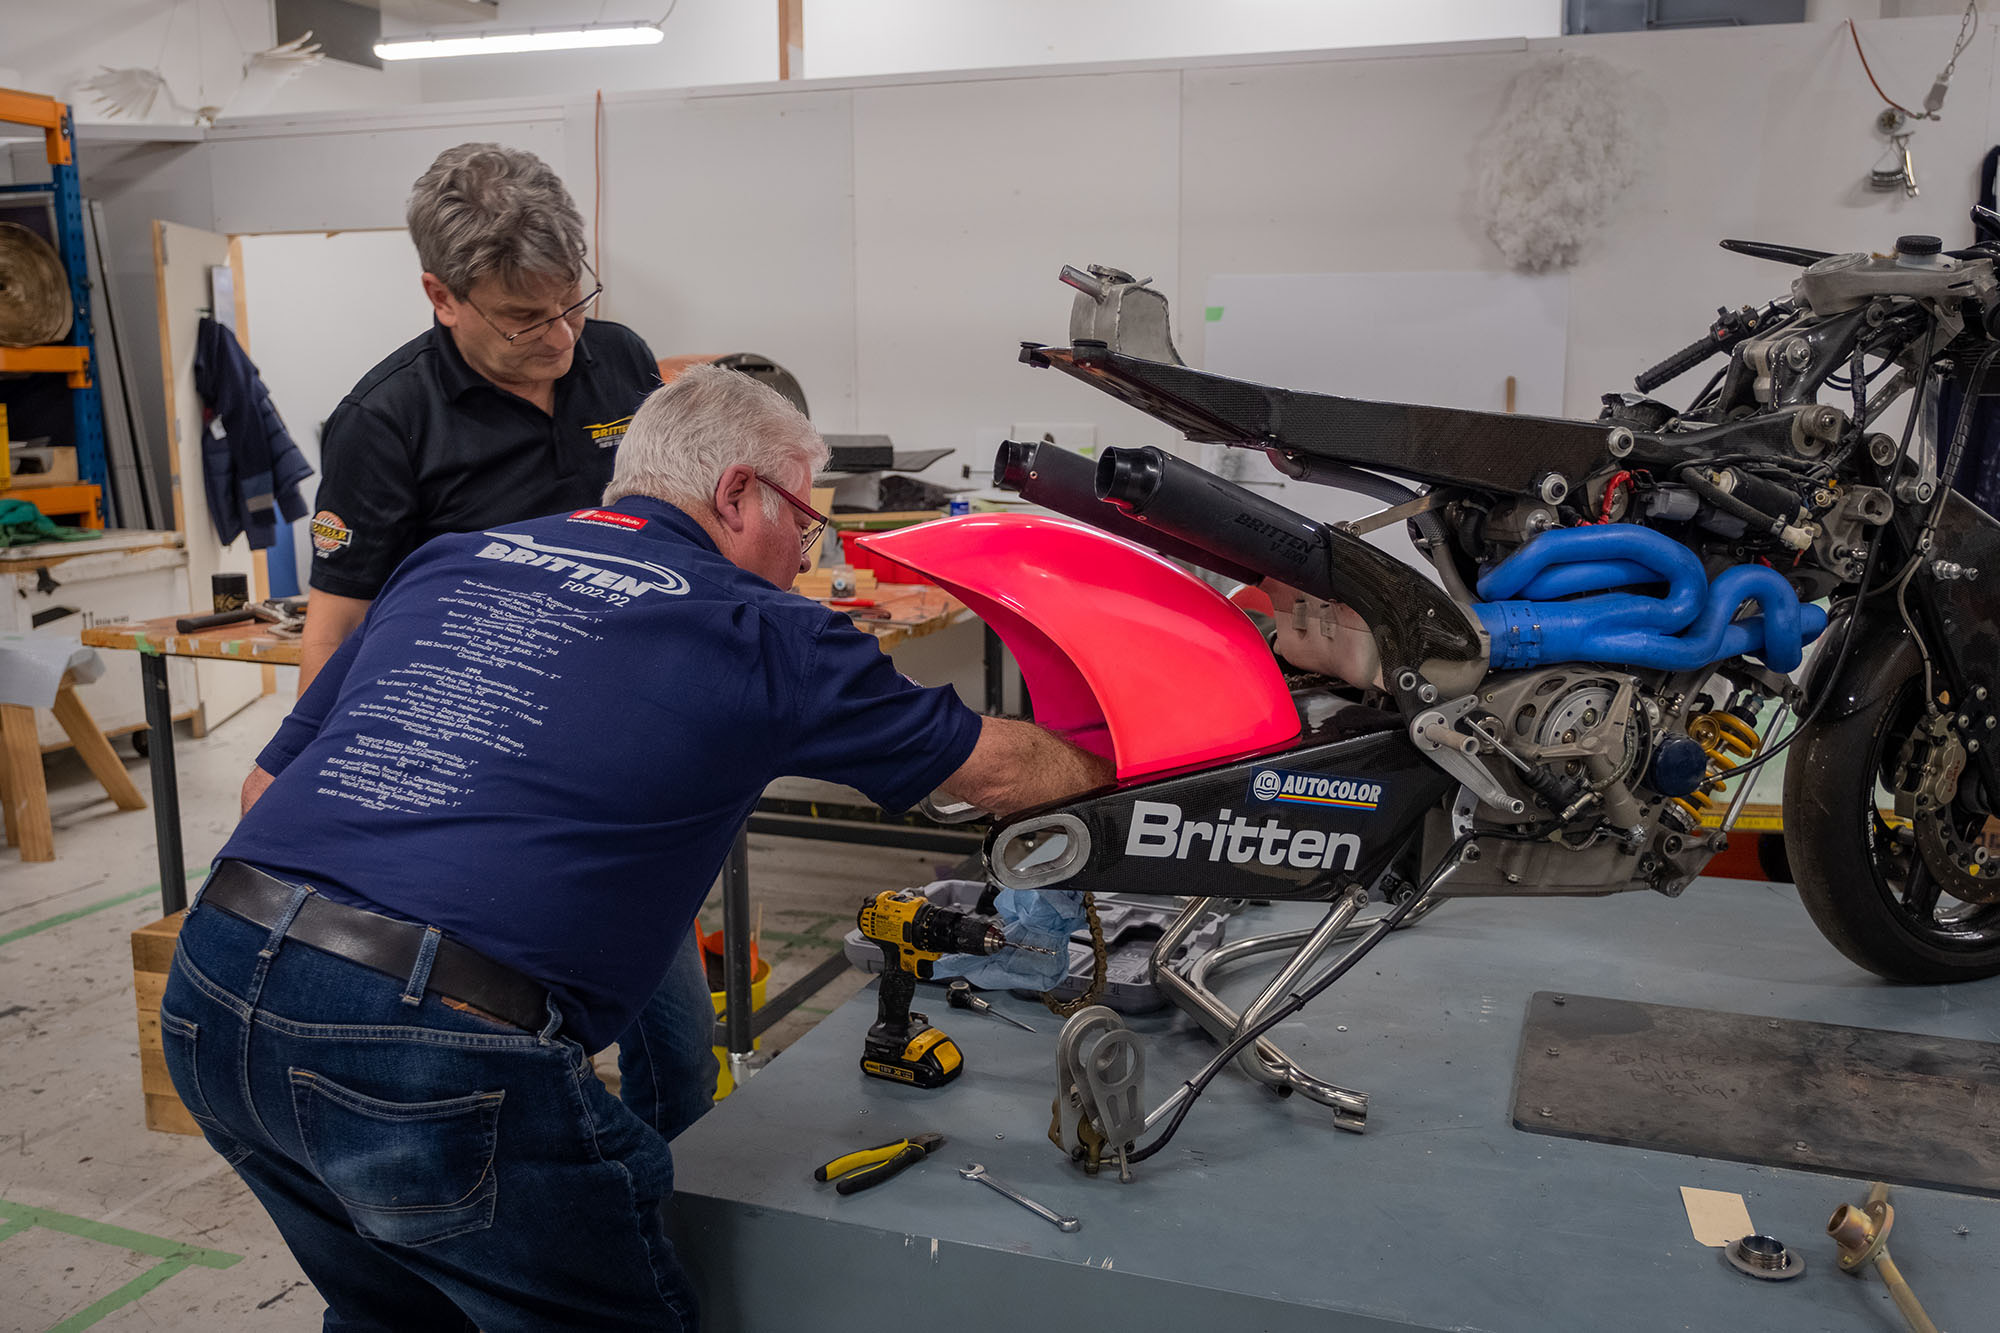 Bob and Craig remove the rear mudguard from the Britten Bike